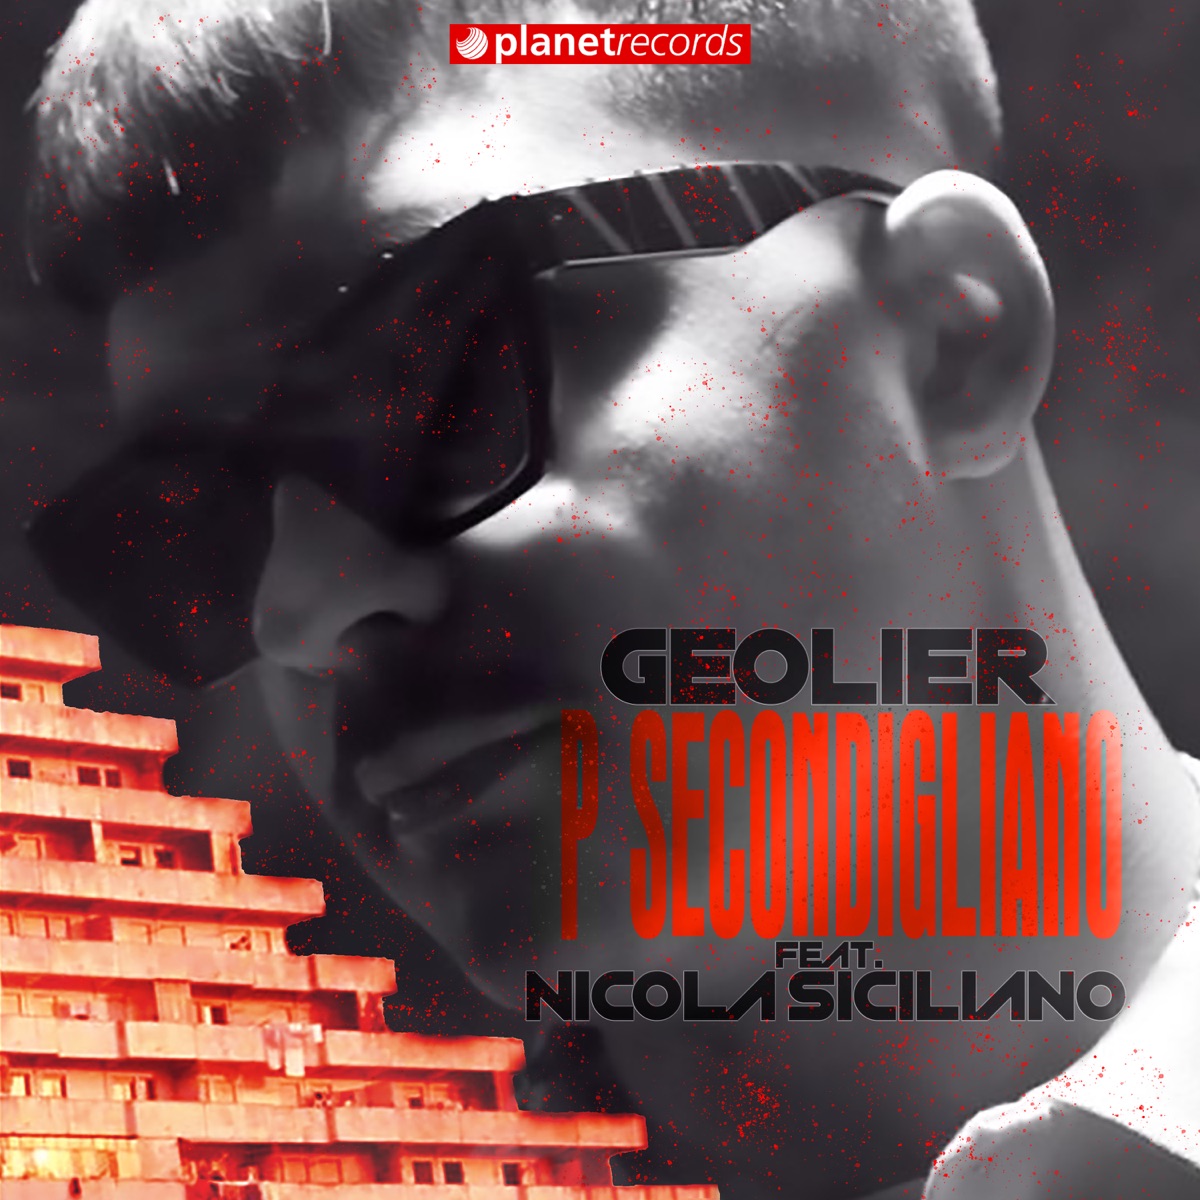 P Secondigliano (feat. Nicola Siciliano) [2020 Remaster] - Single - Album  by Geolier - Apple Music